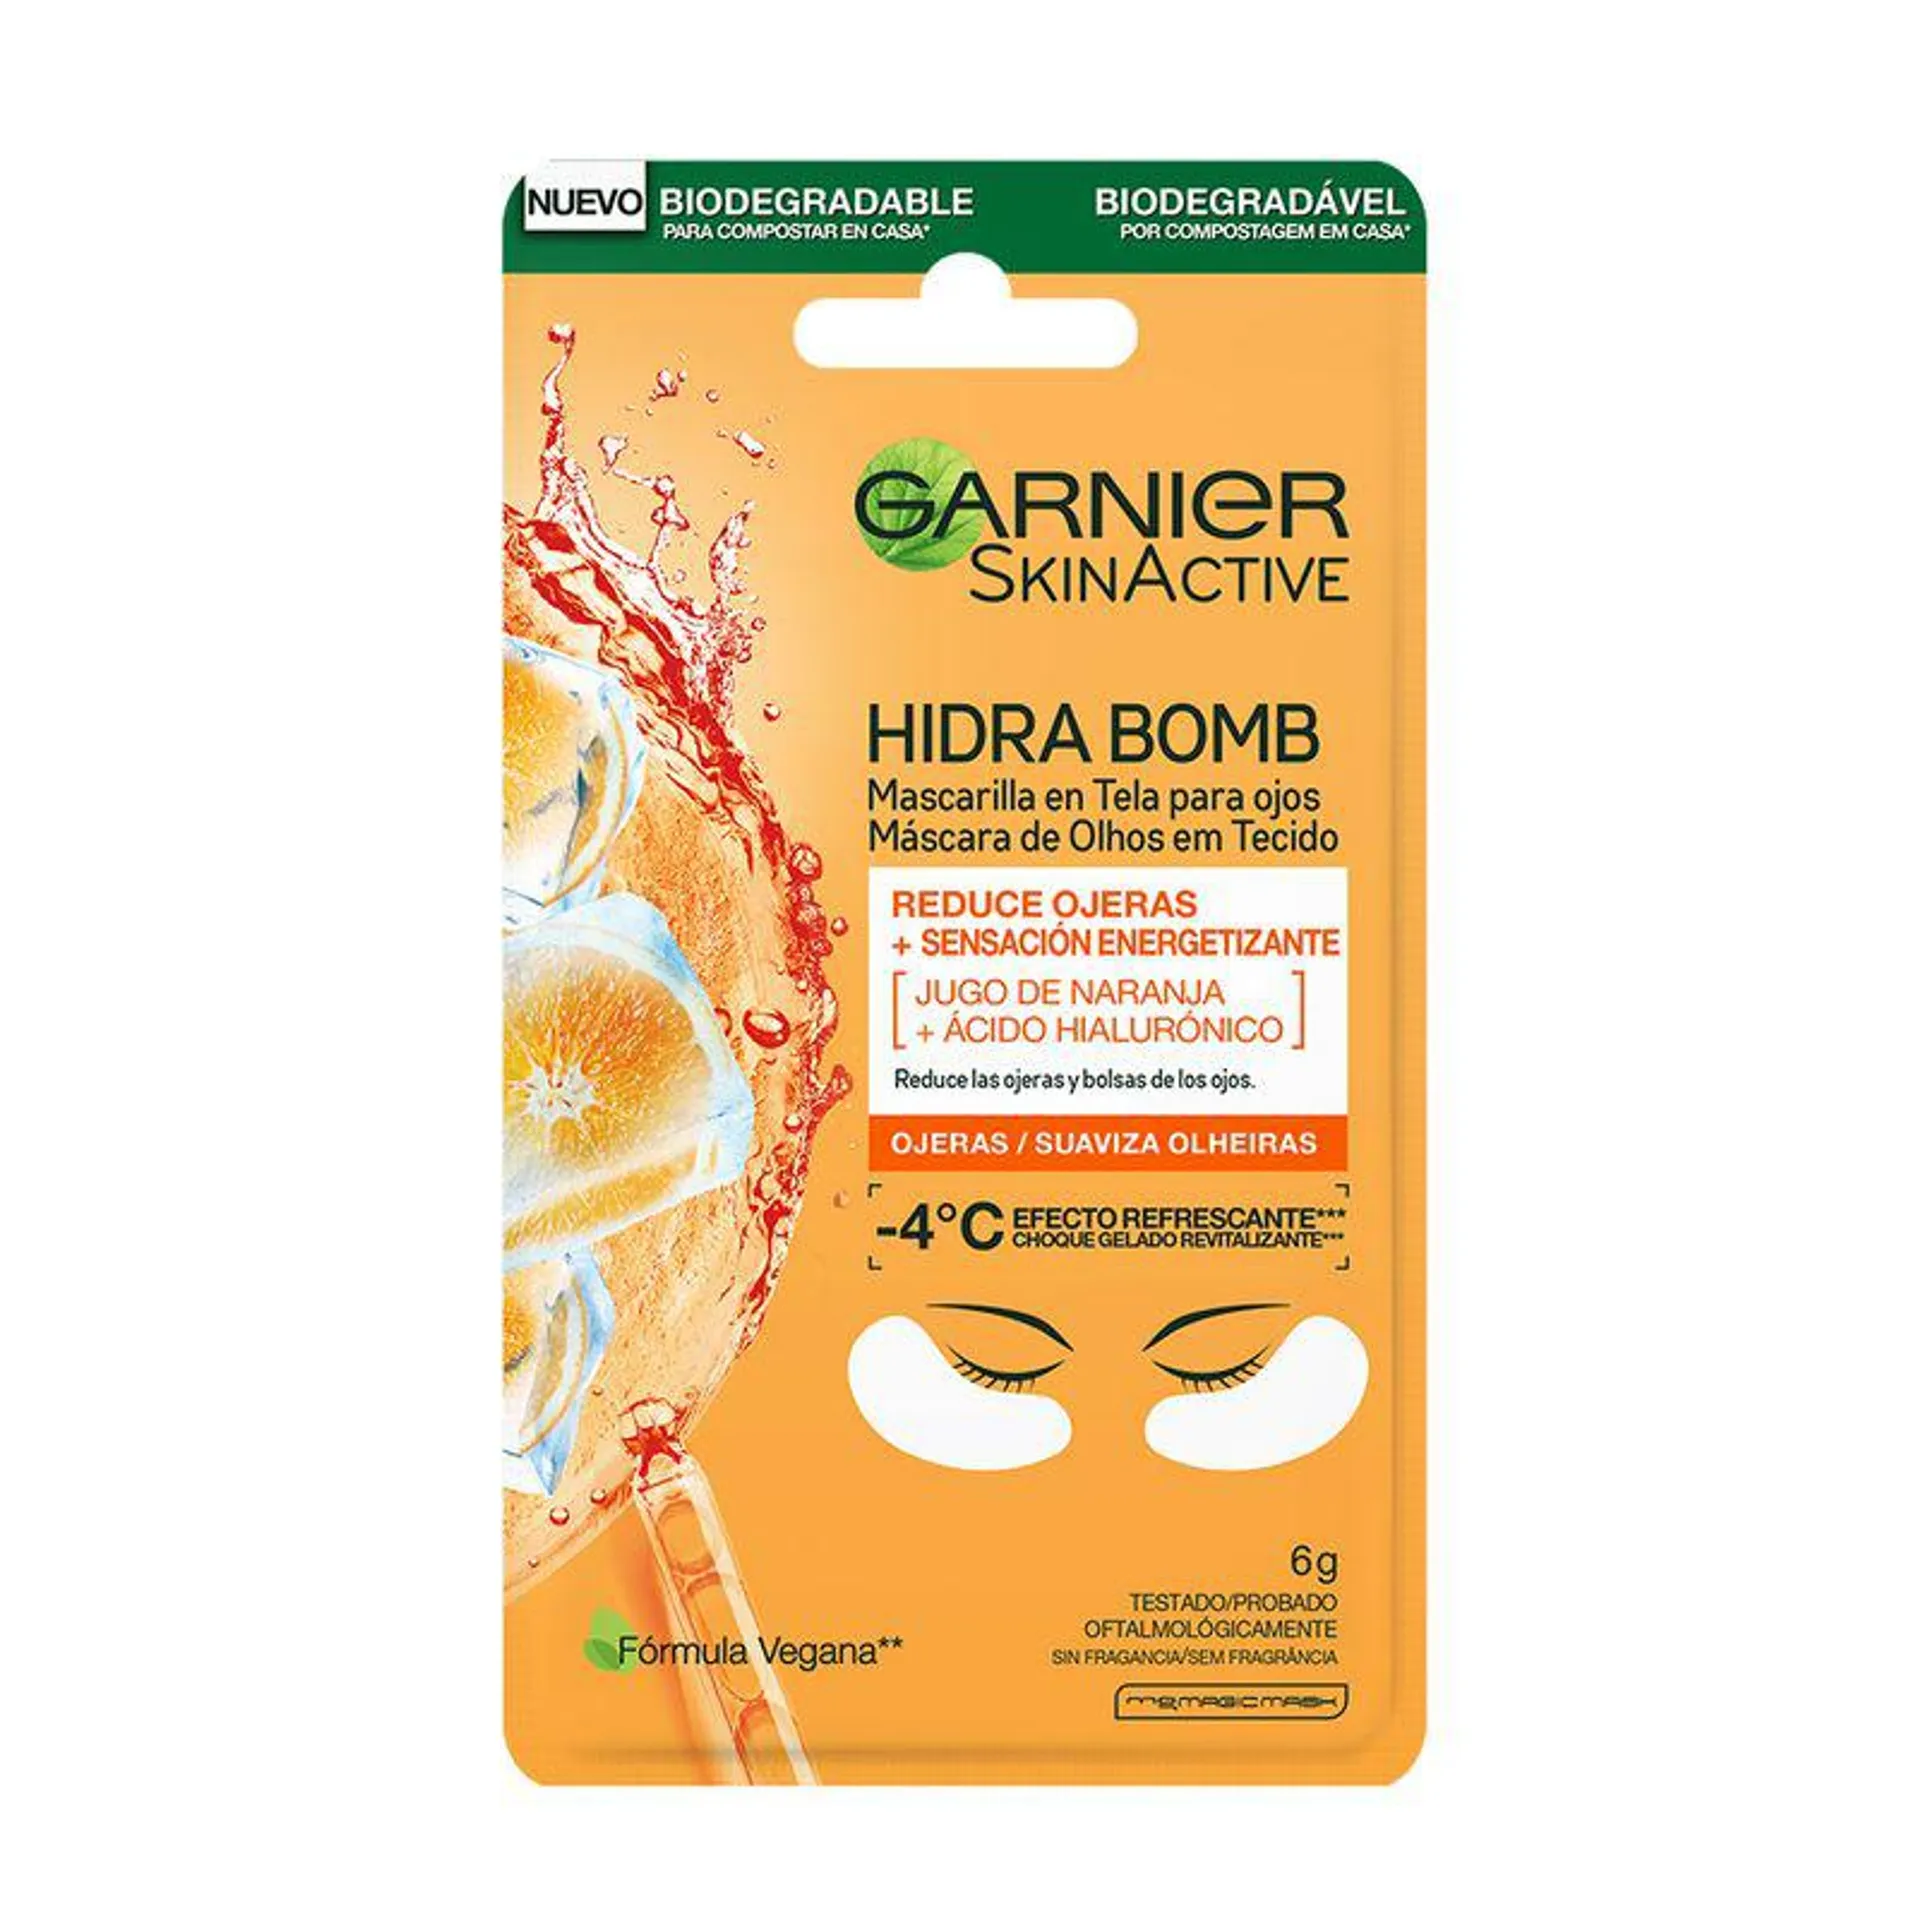 Mascarilla en Tela para Ojos Garnier Naranja Biodegradable Skin Active